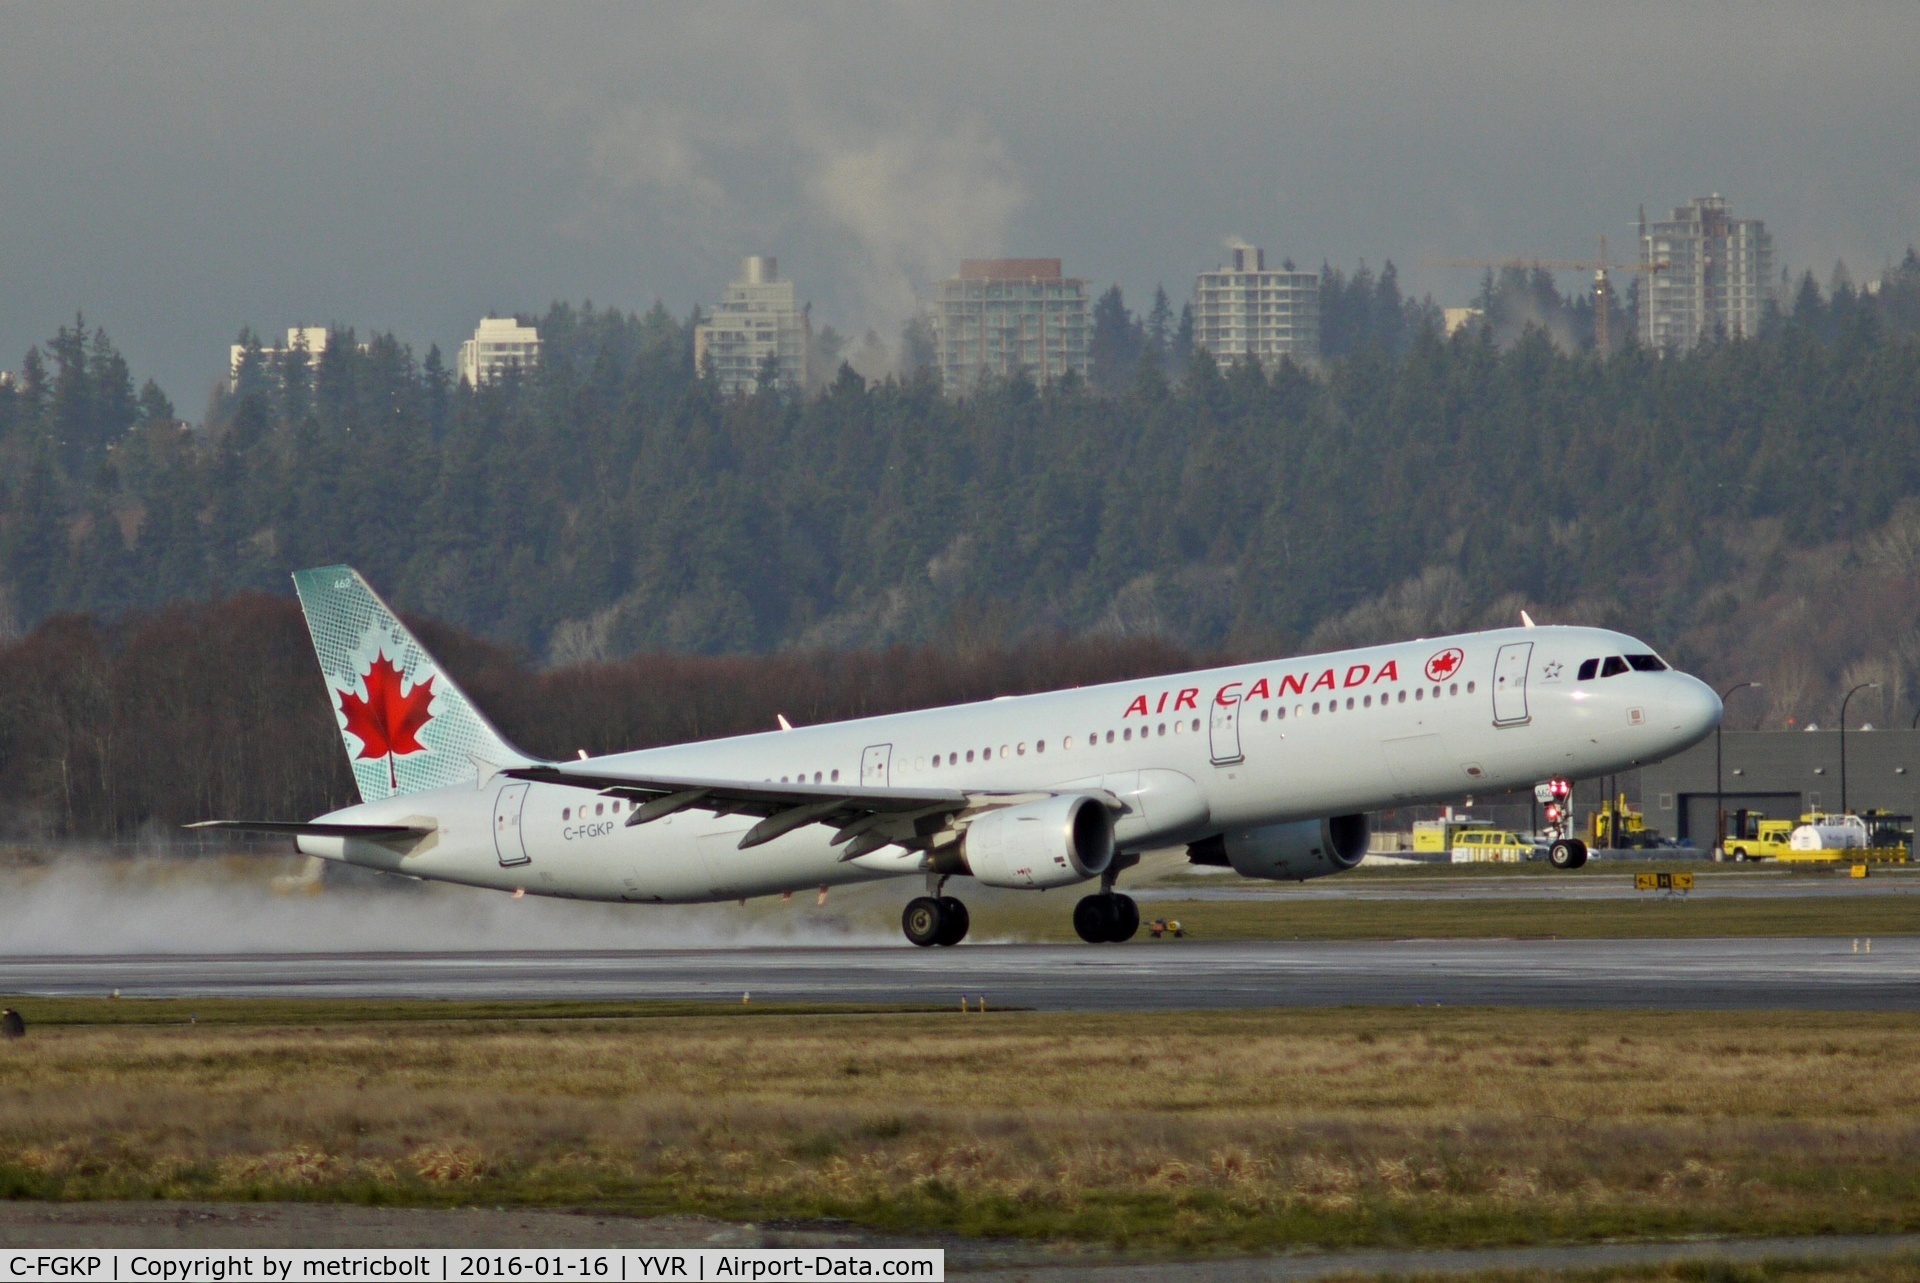 C-FGKP, 2009 Airbus A321-211 C/N 3884, AC1162 to Toronto.